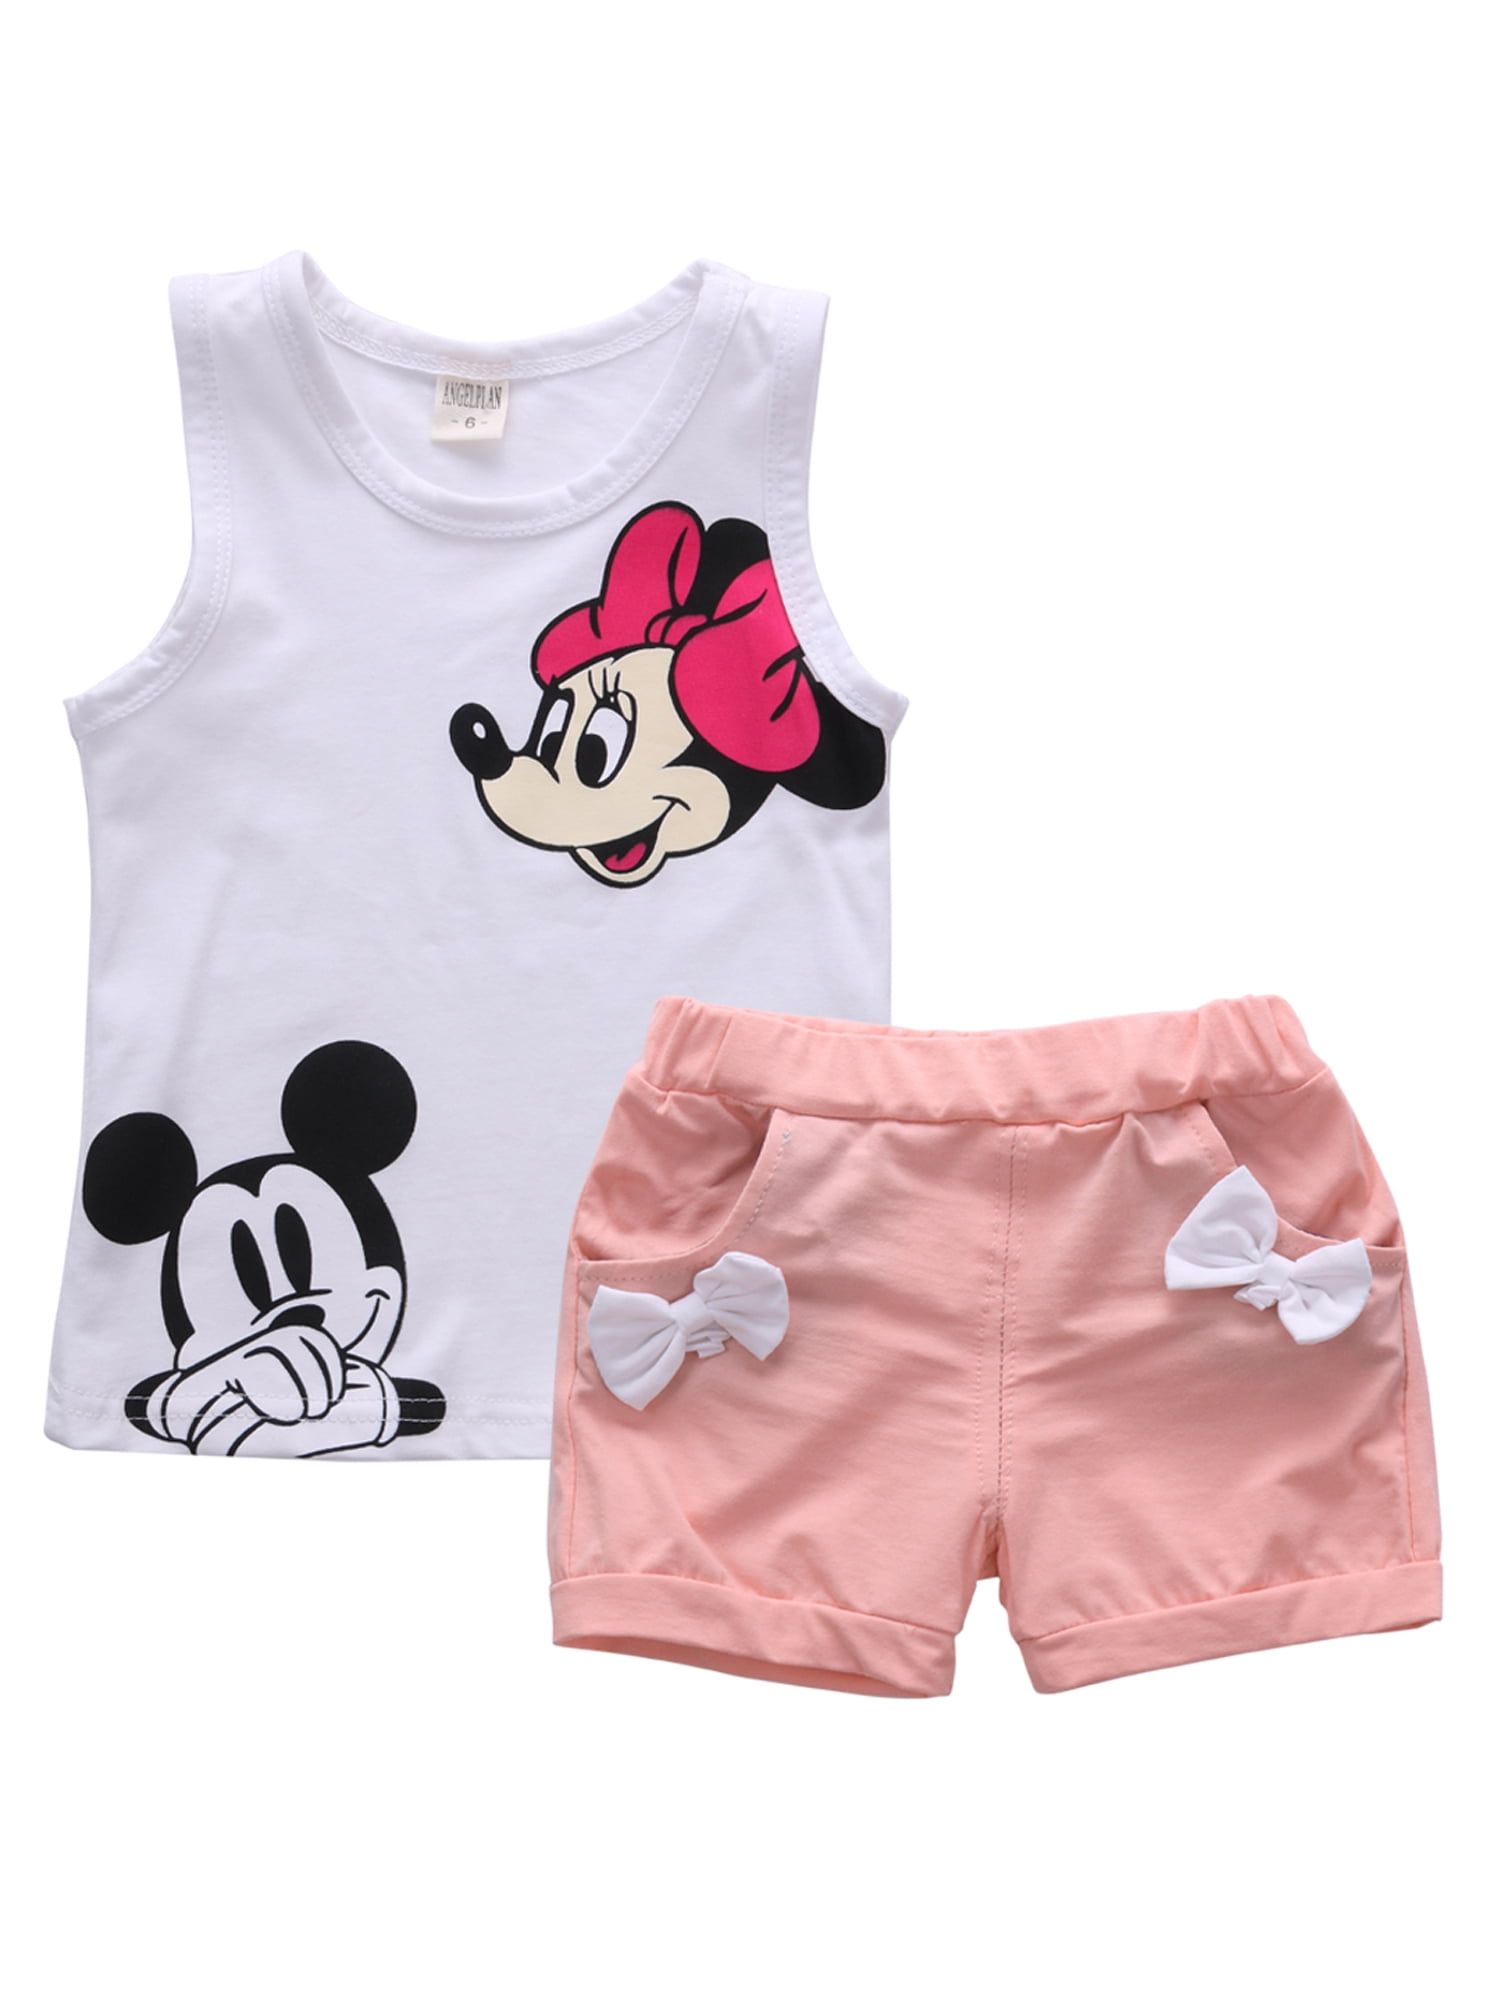 2pcs Toddler Girls Summer Outfits Sleeveless Chiffon Blouse+Shorts Clothes Sets 